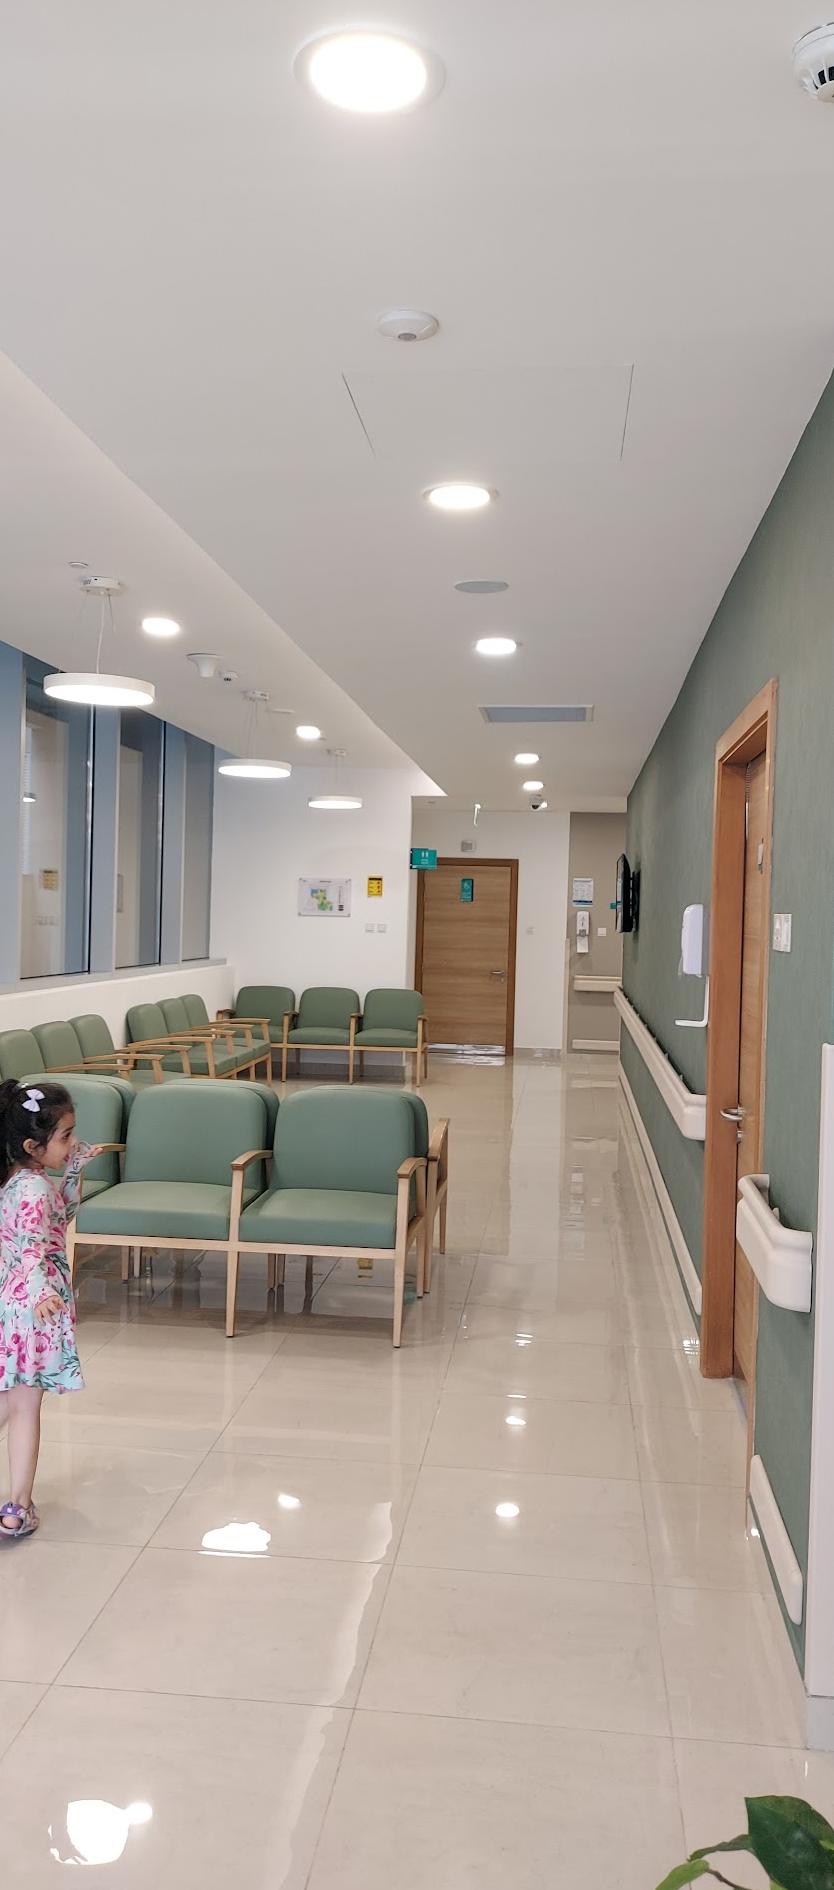 Aster-Krankenhaus Sharjah